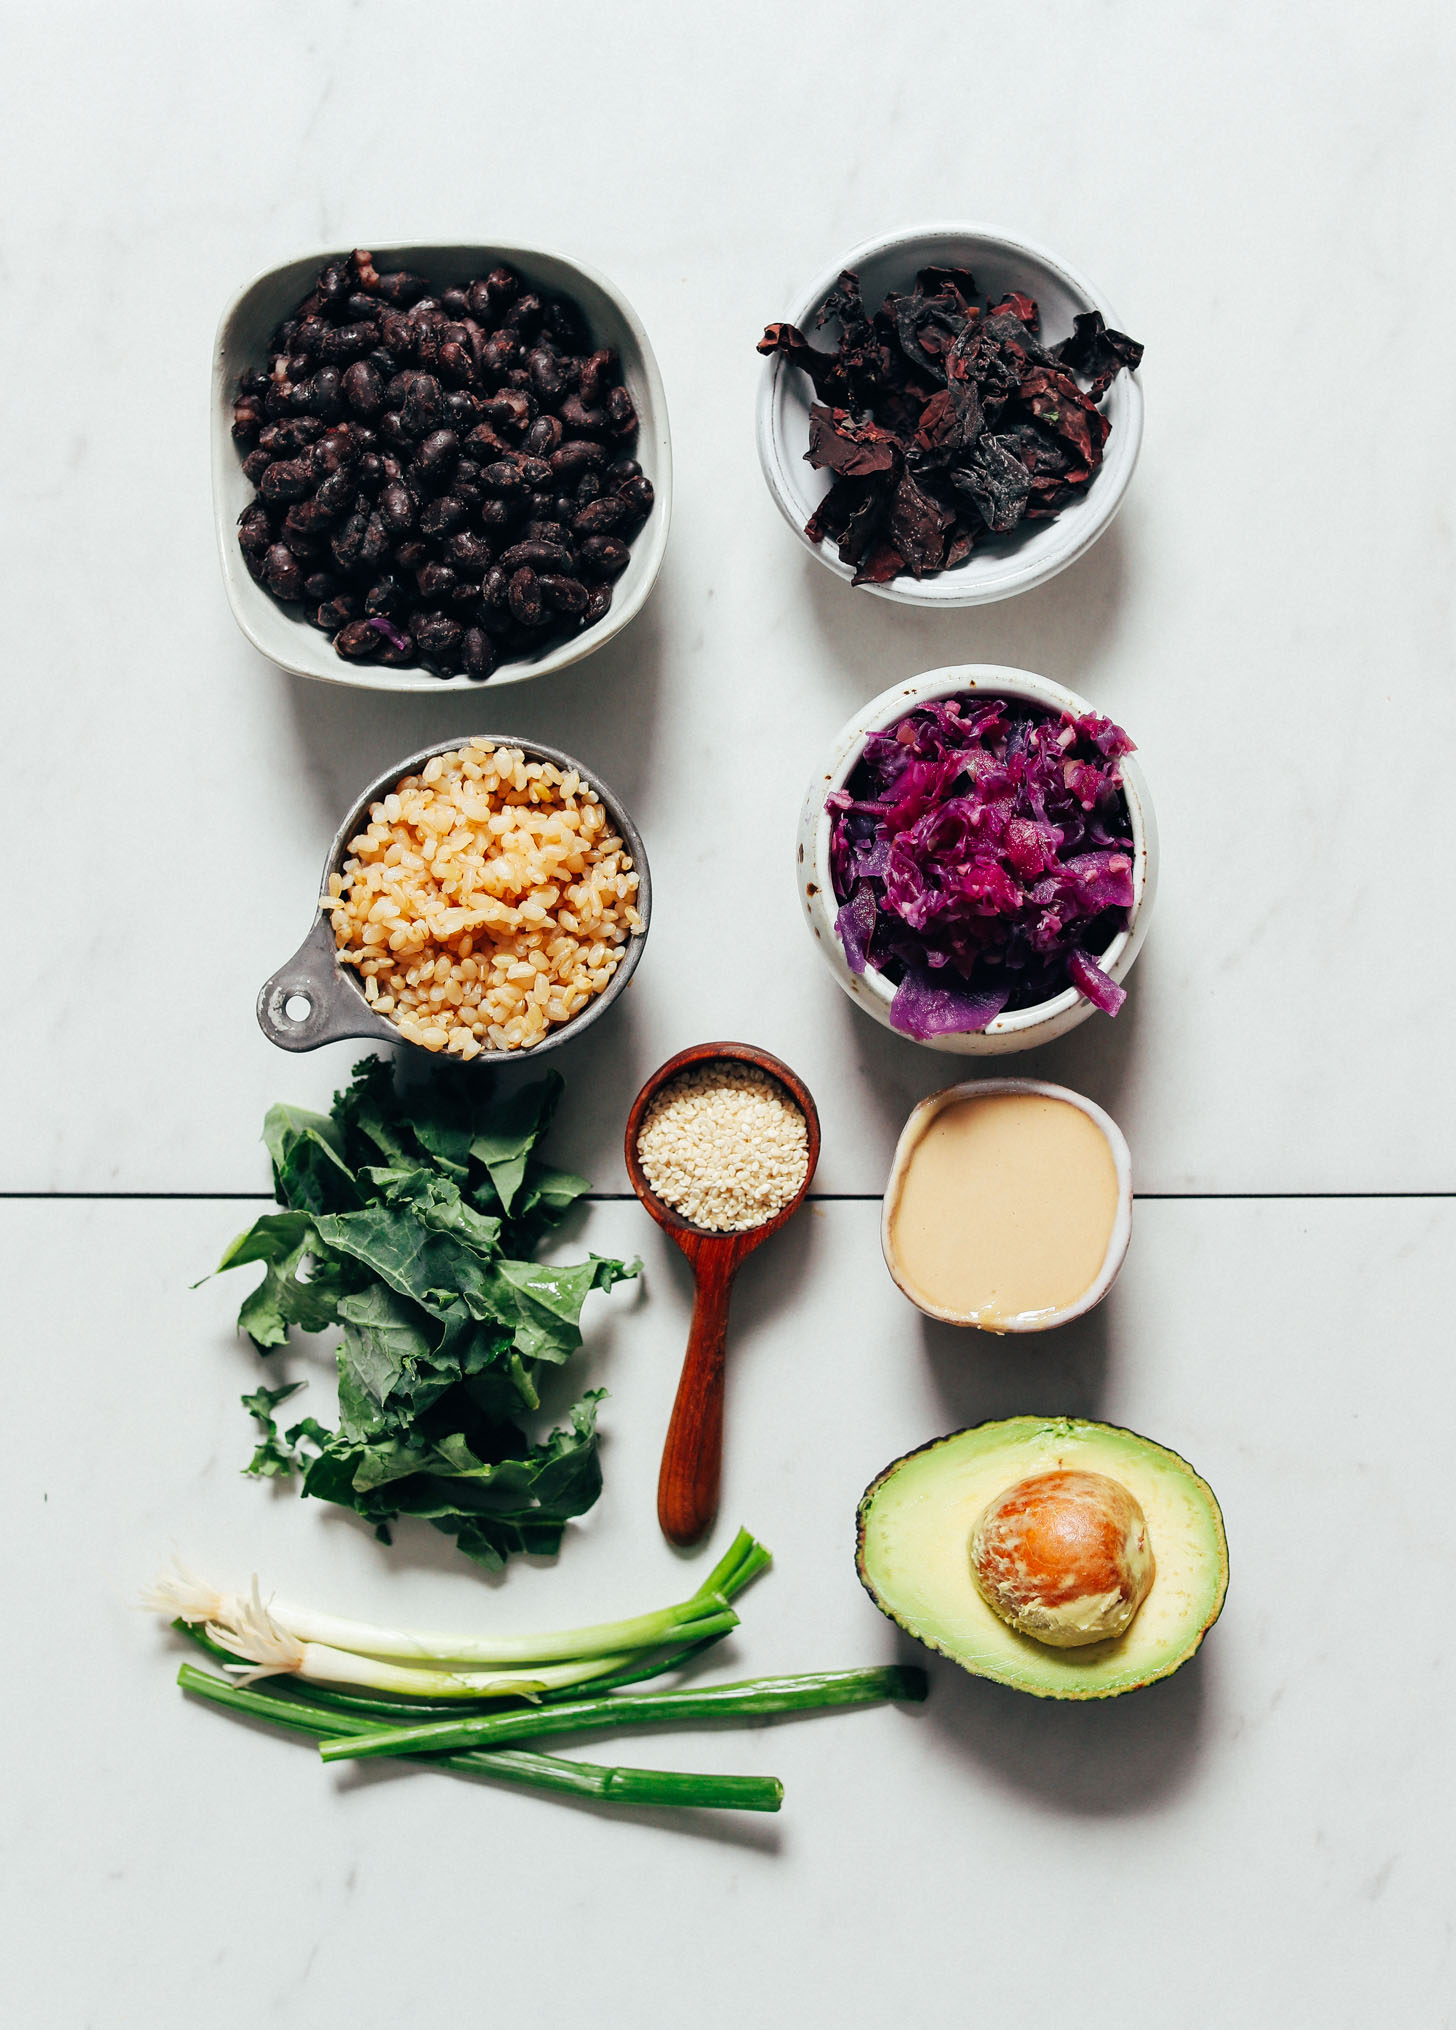 Black beans, seaweed, brown rice, sauerkraut, kale, and other ingredients for making our Black Bean Buddha Bowl recipe